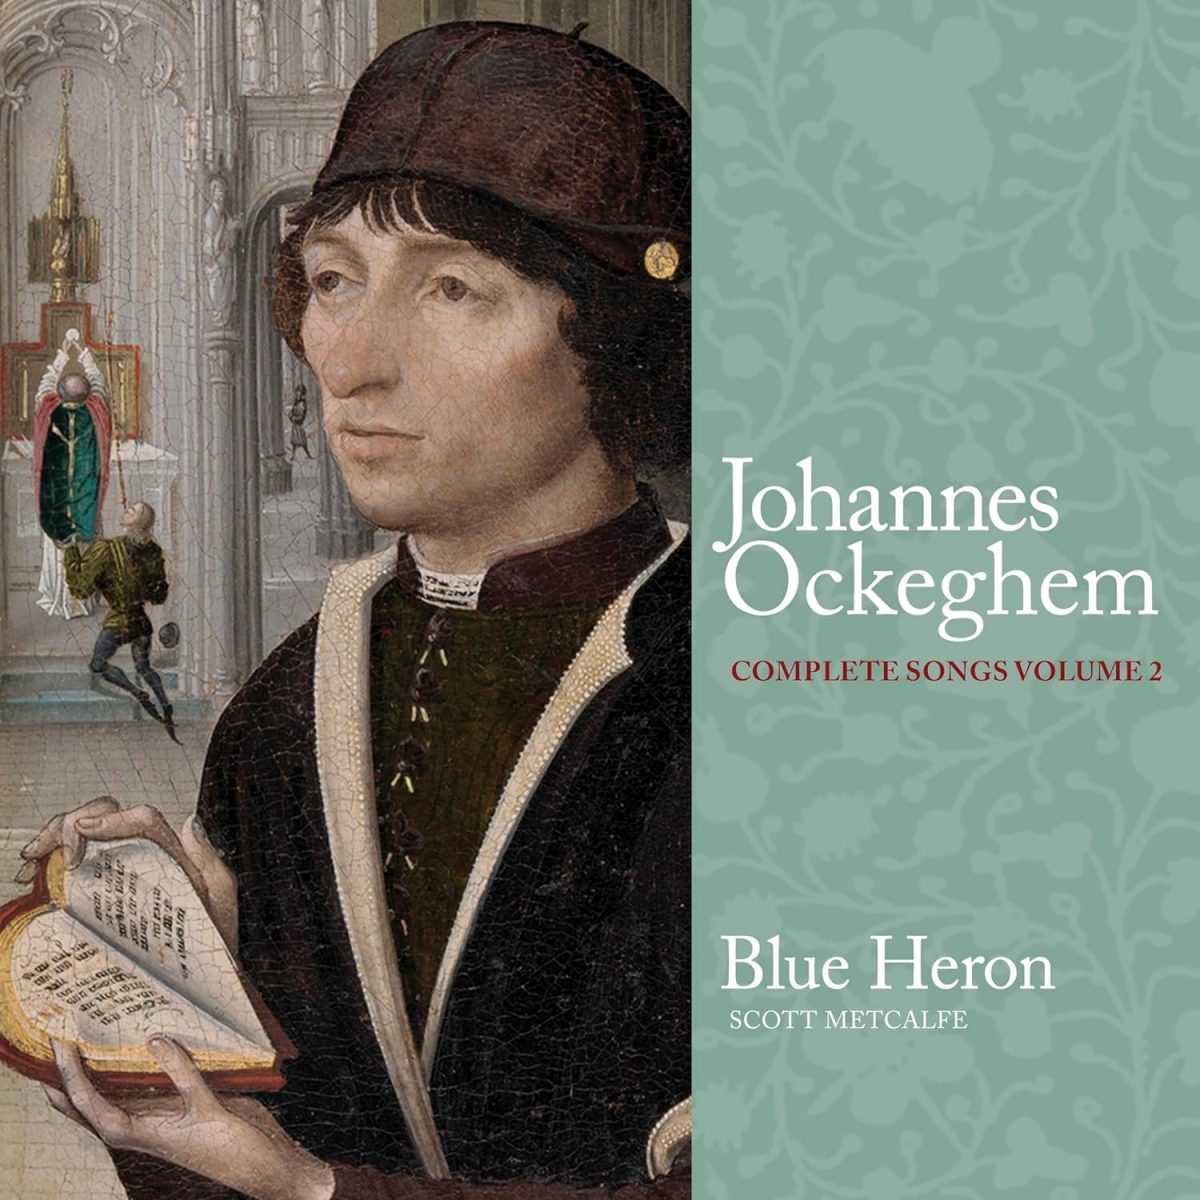 CD cover Ockeghem Songs Vol 2 Blue Heron